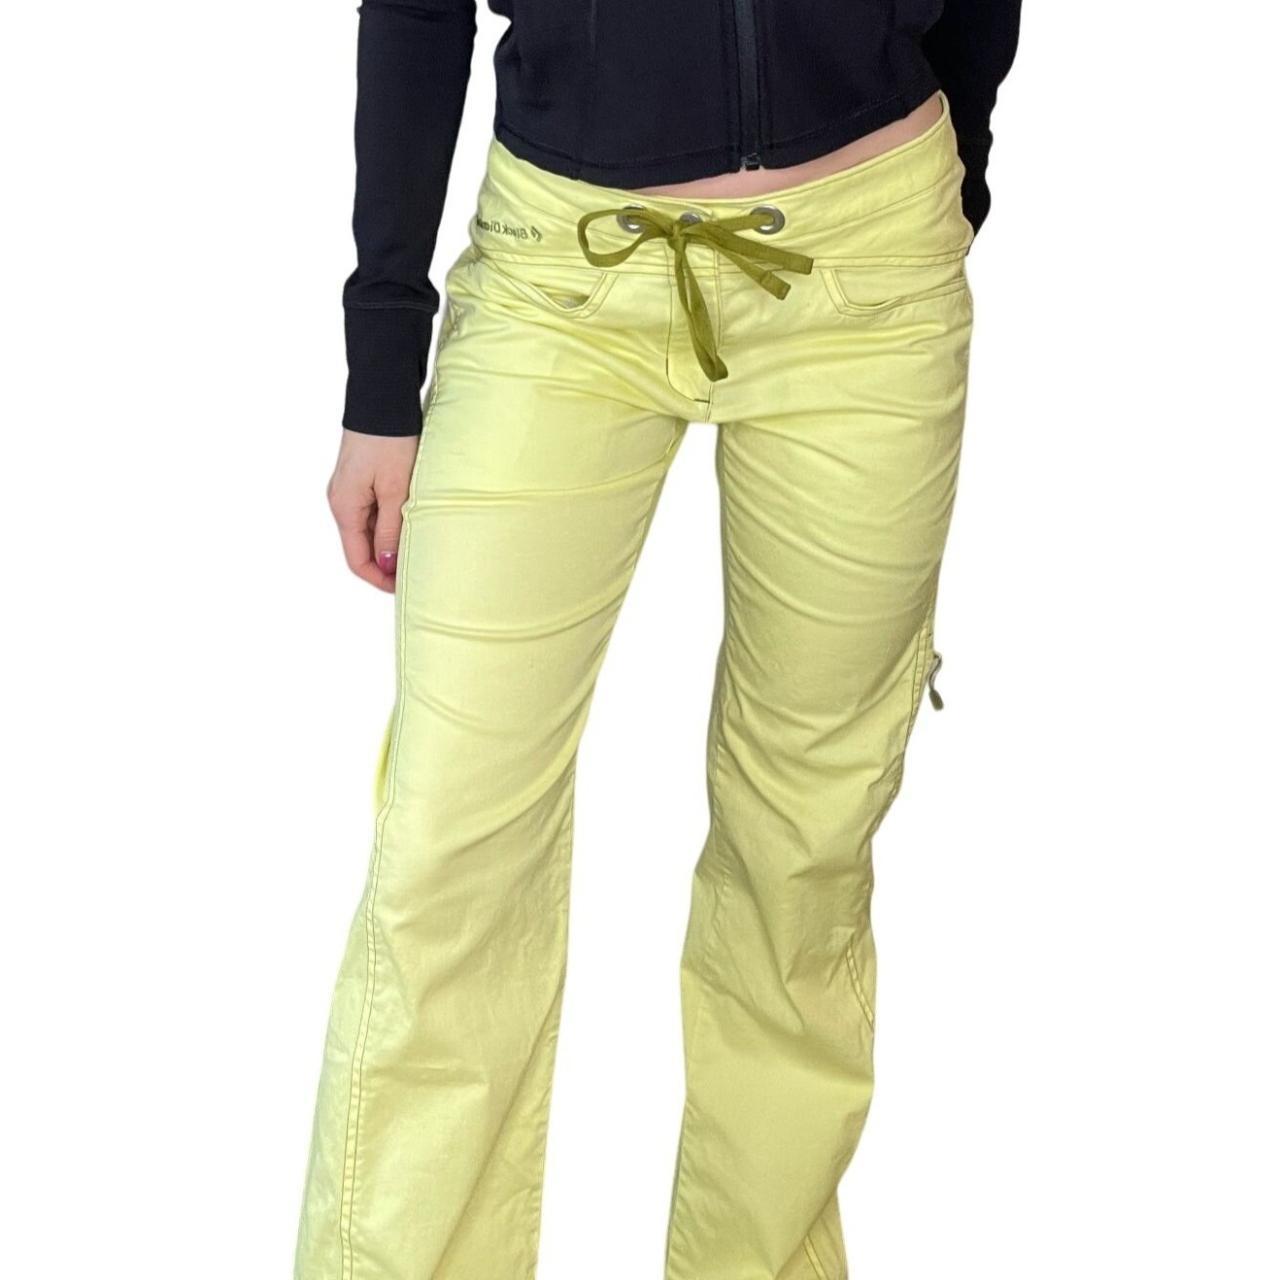 Black Diamond Women's Yellow and Green Trousers (4)